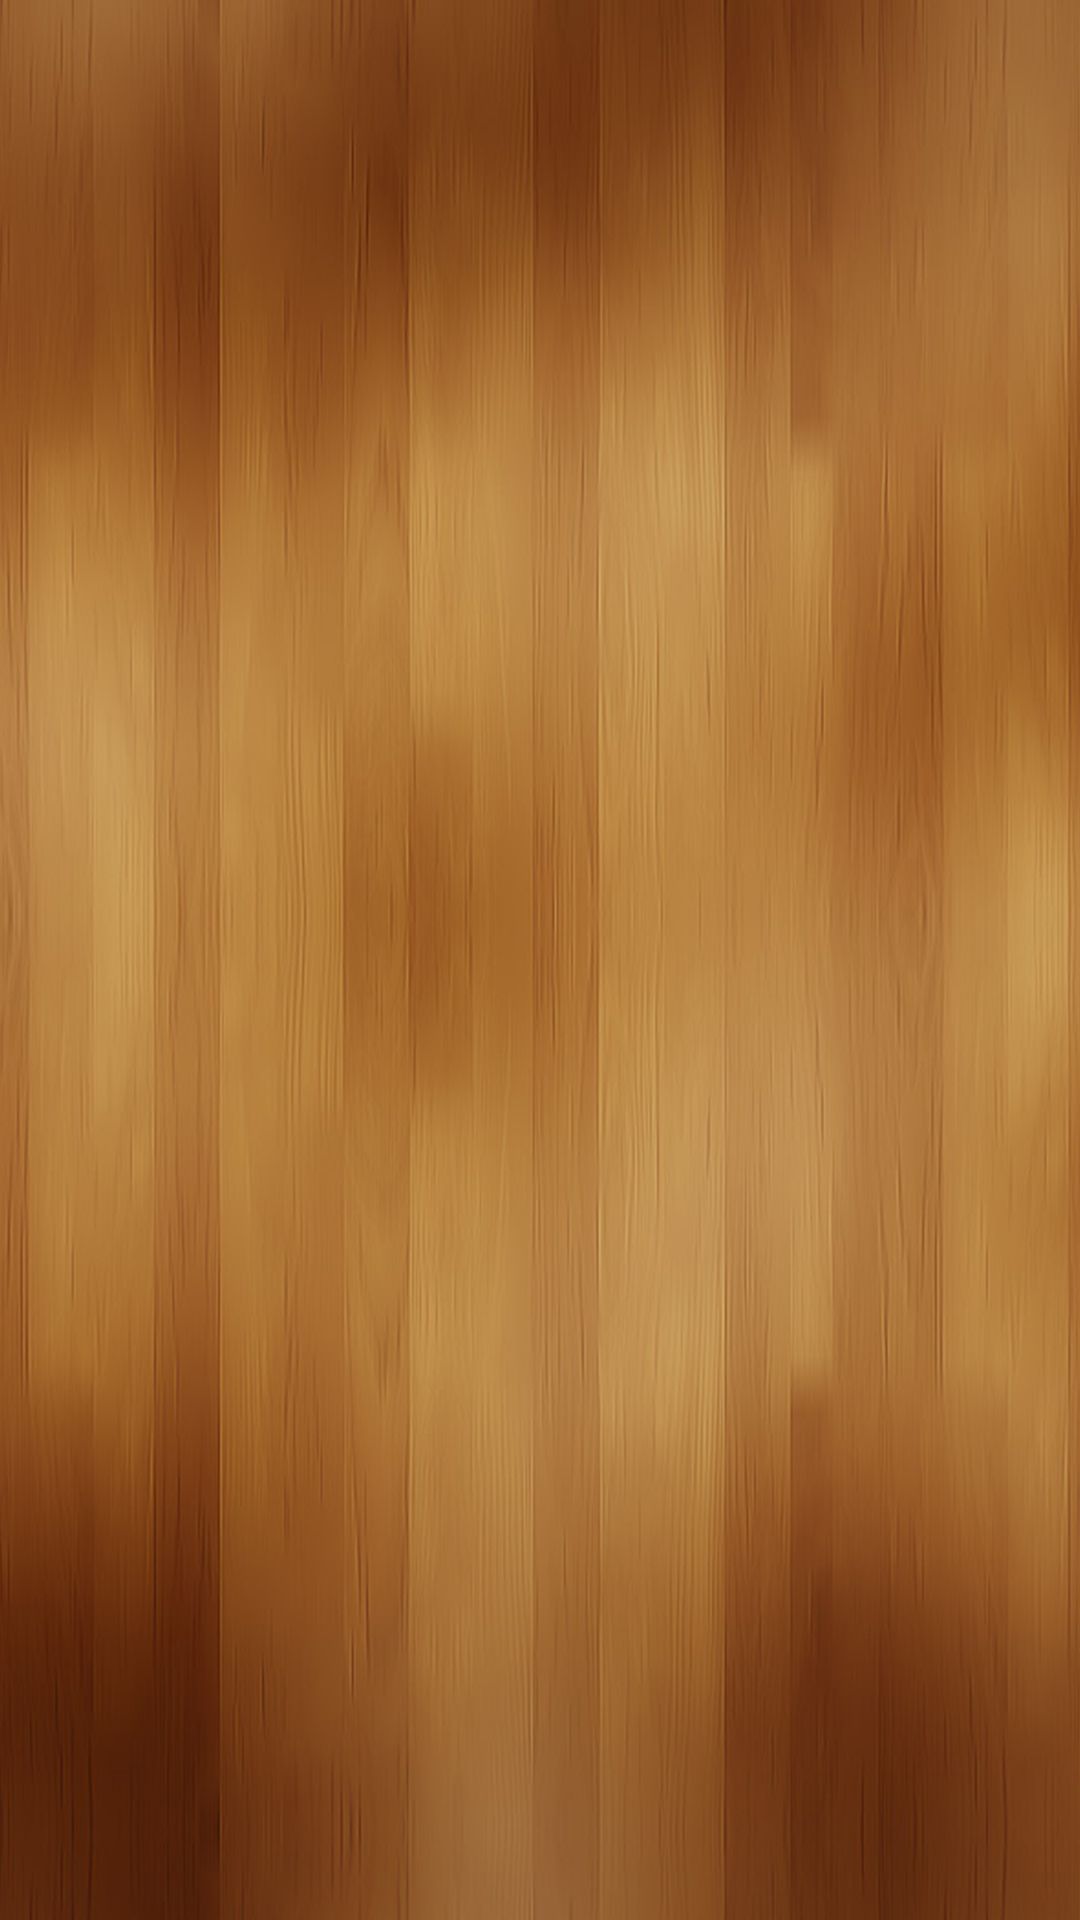 Wood texture | iPhone Wallpaper